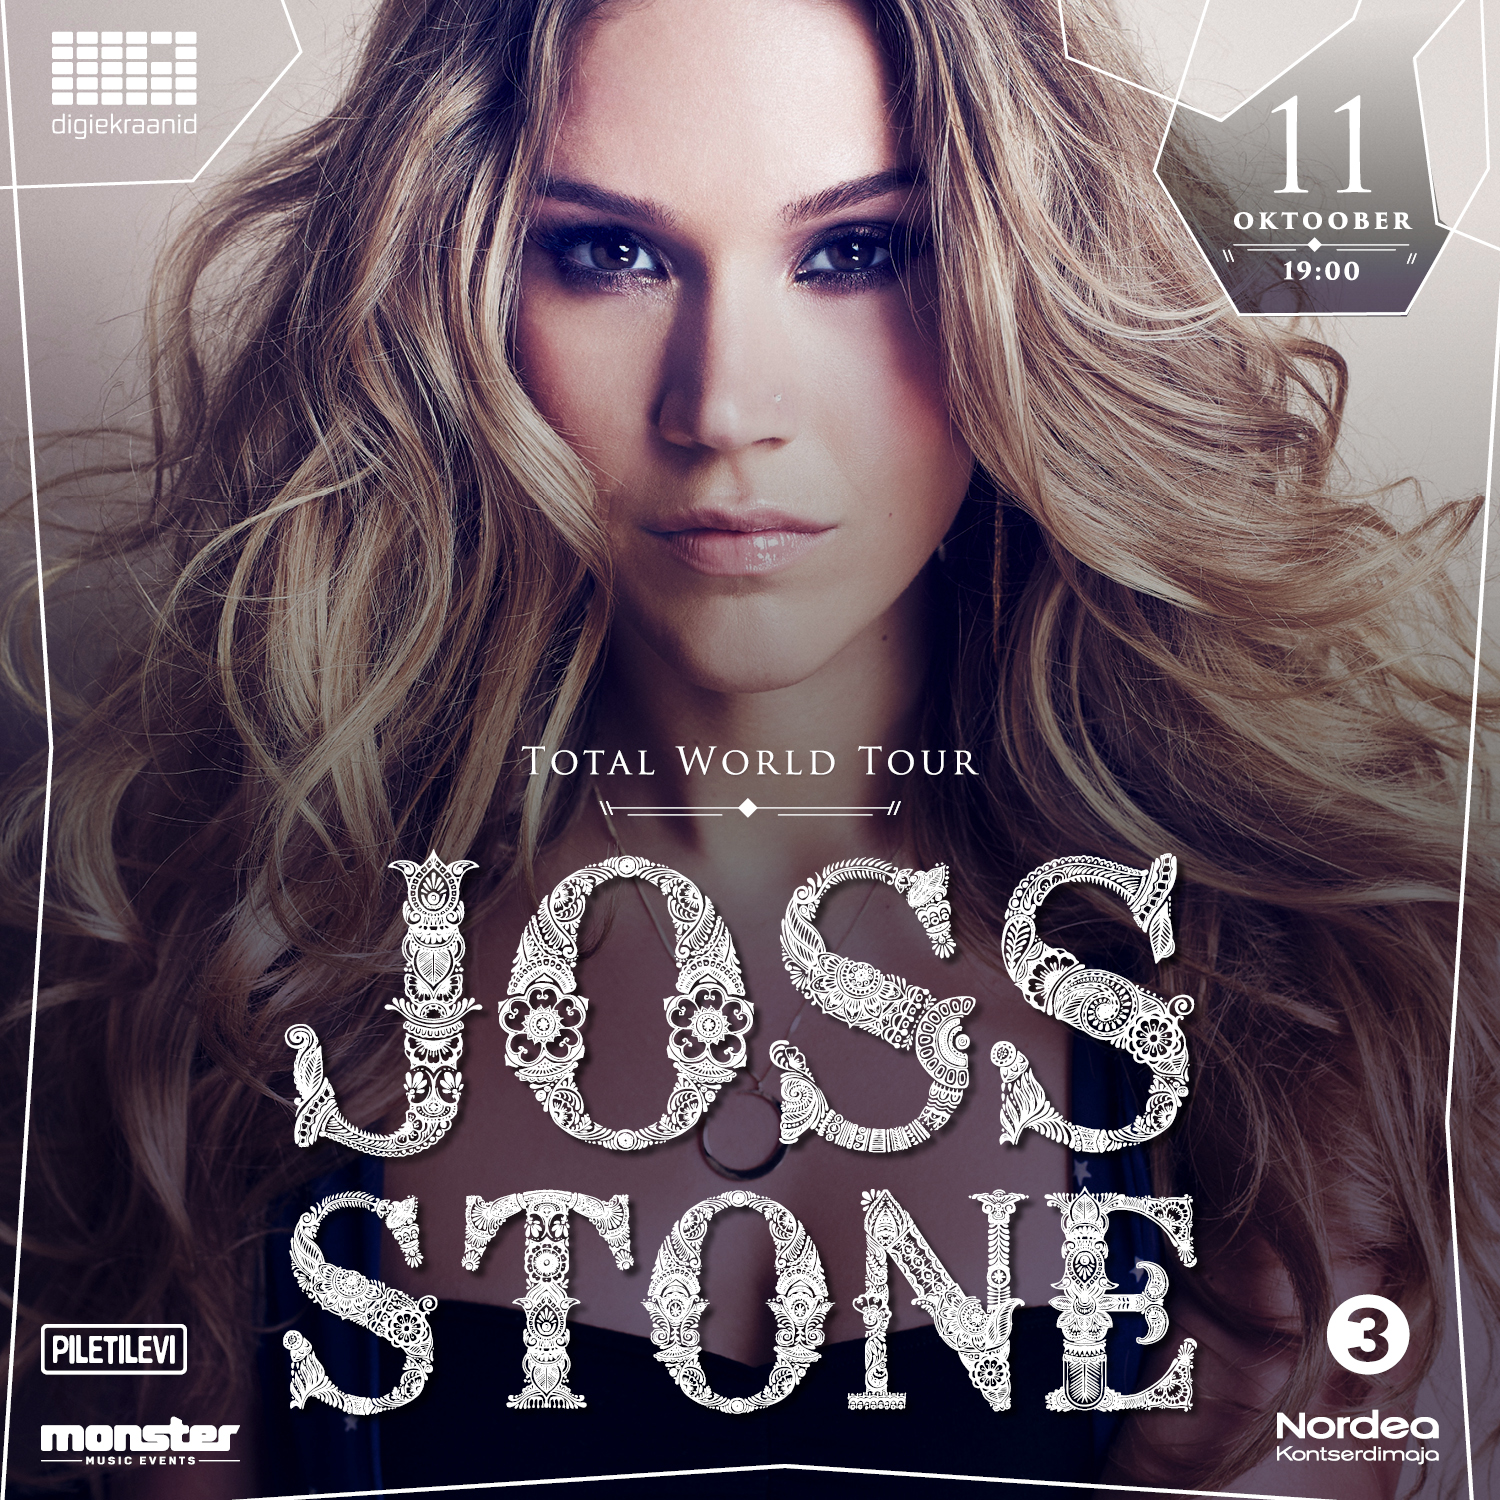 joss stone tour schedule